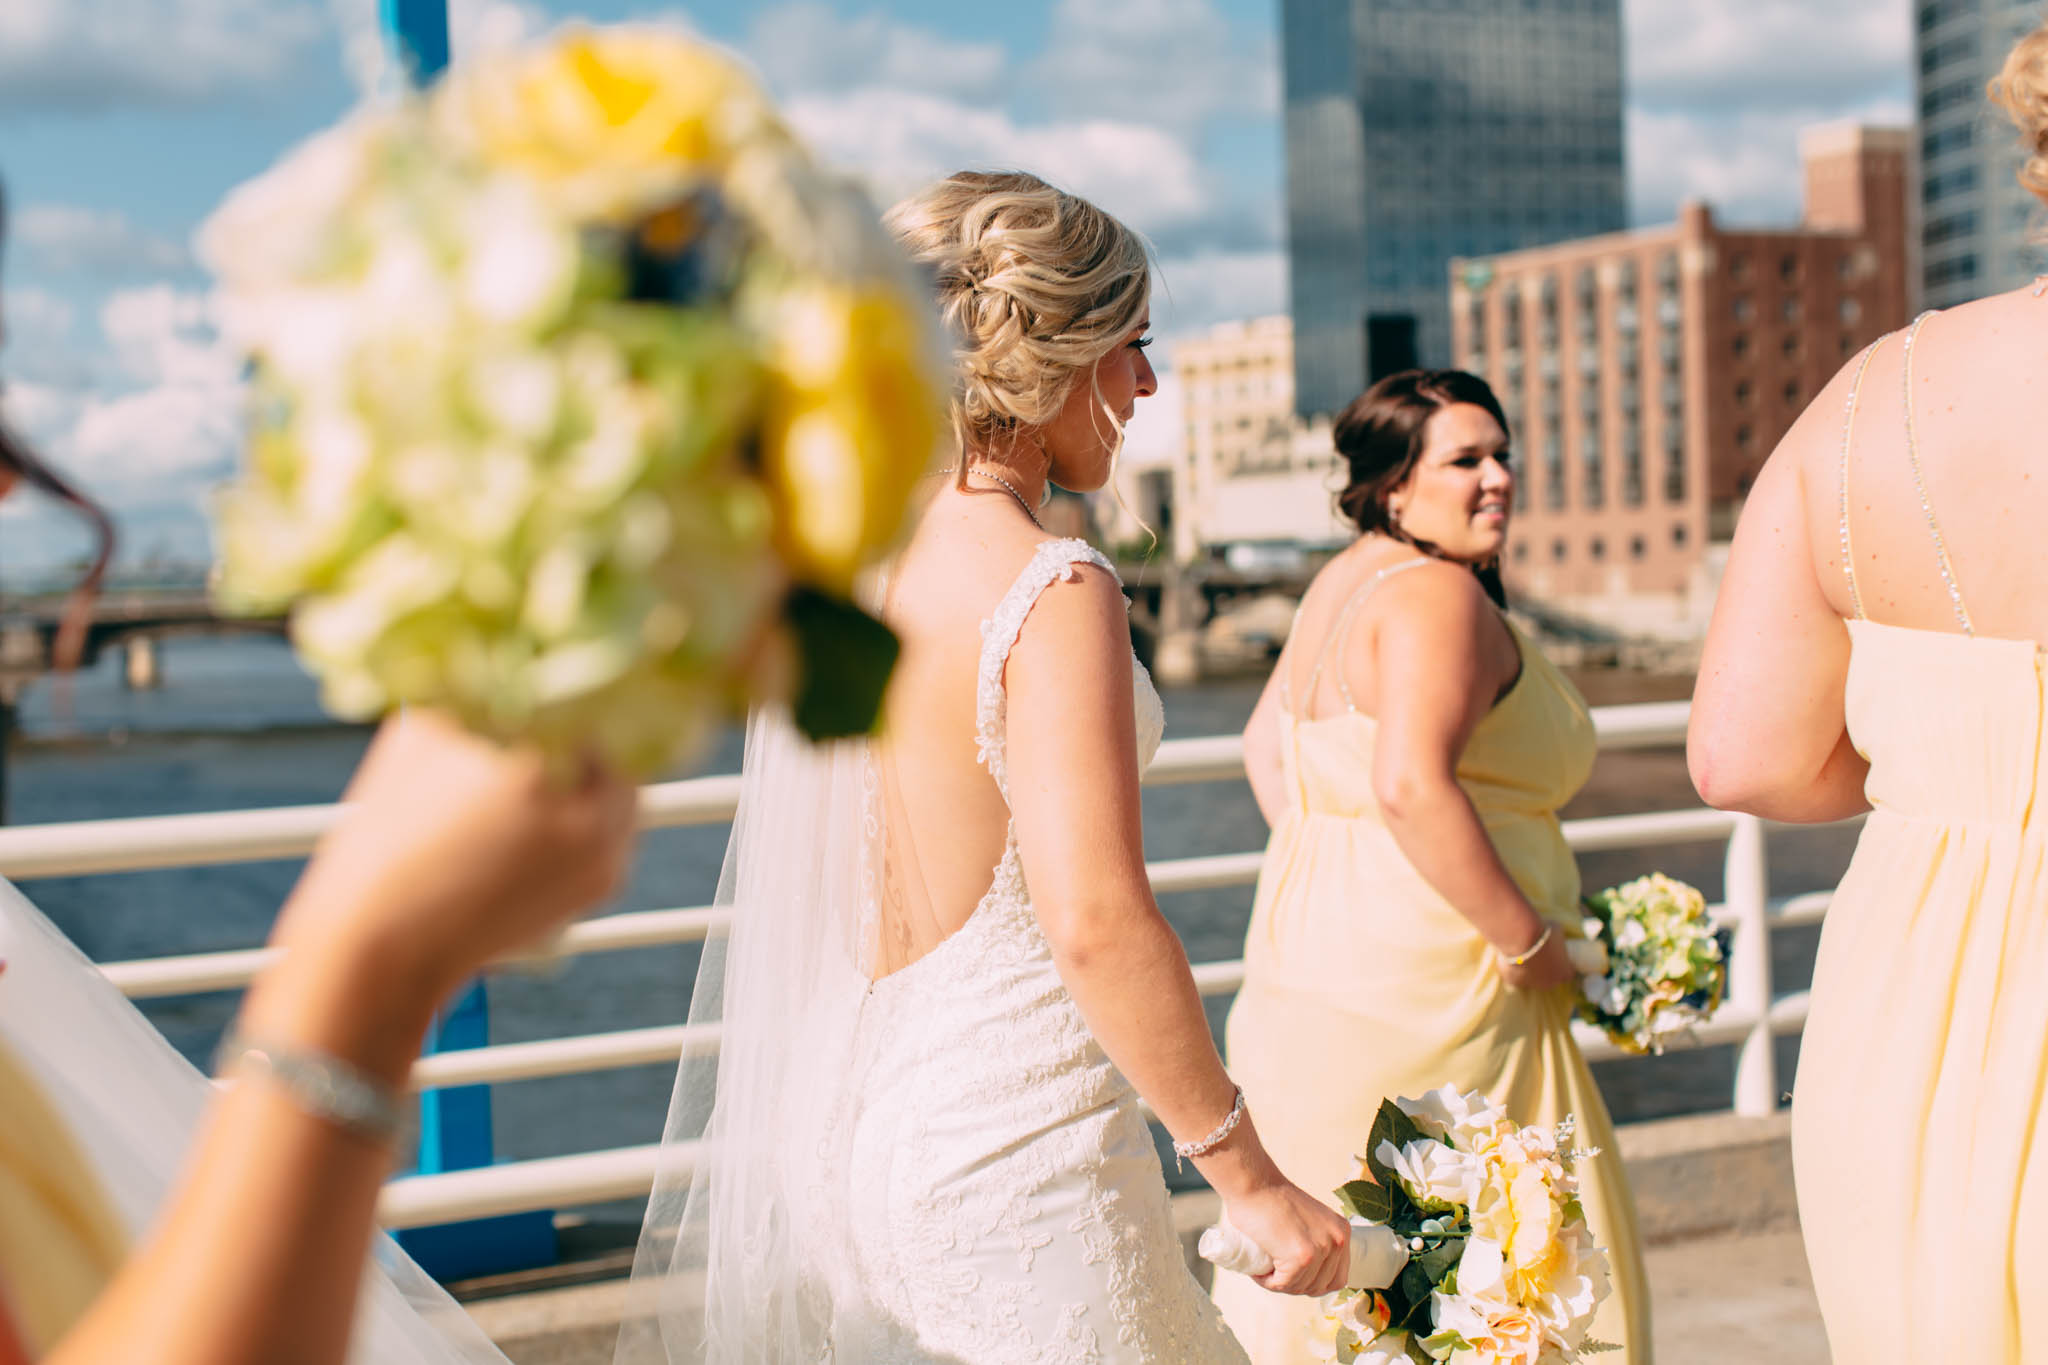 Jillian VanZytveld Photography - Grand Rapids Lifestyle Wedding Photography - 105.jpg